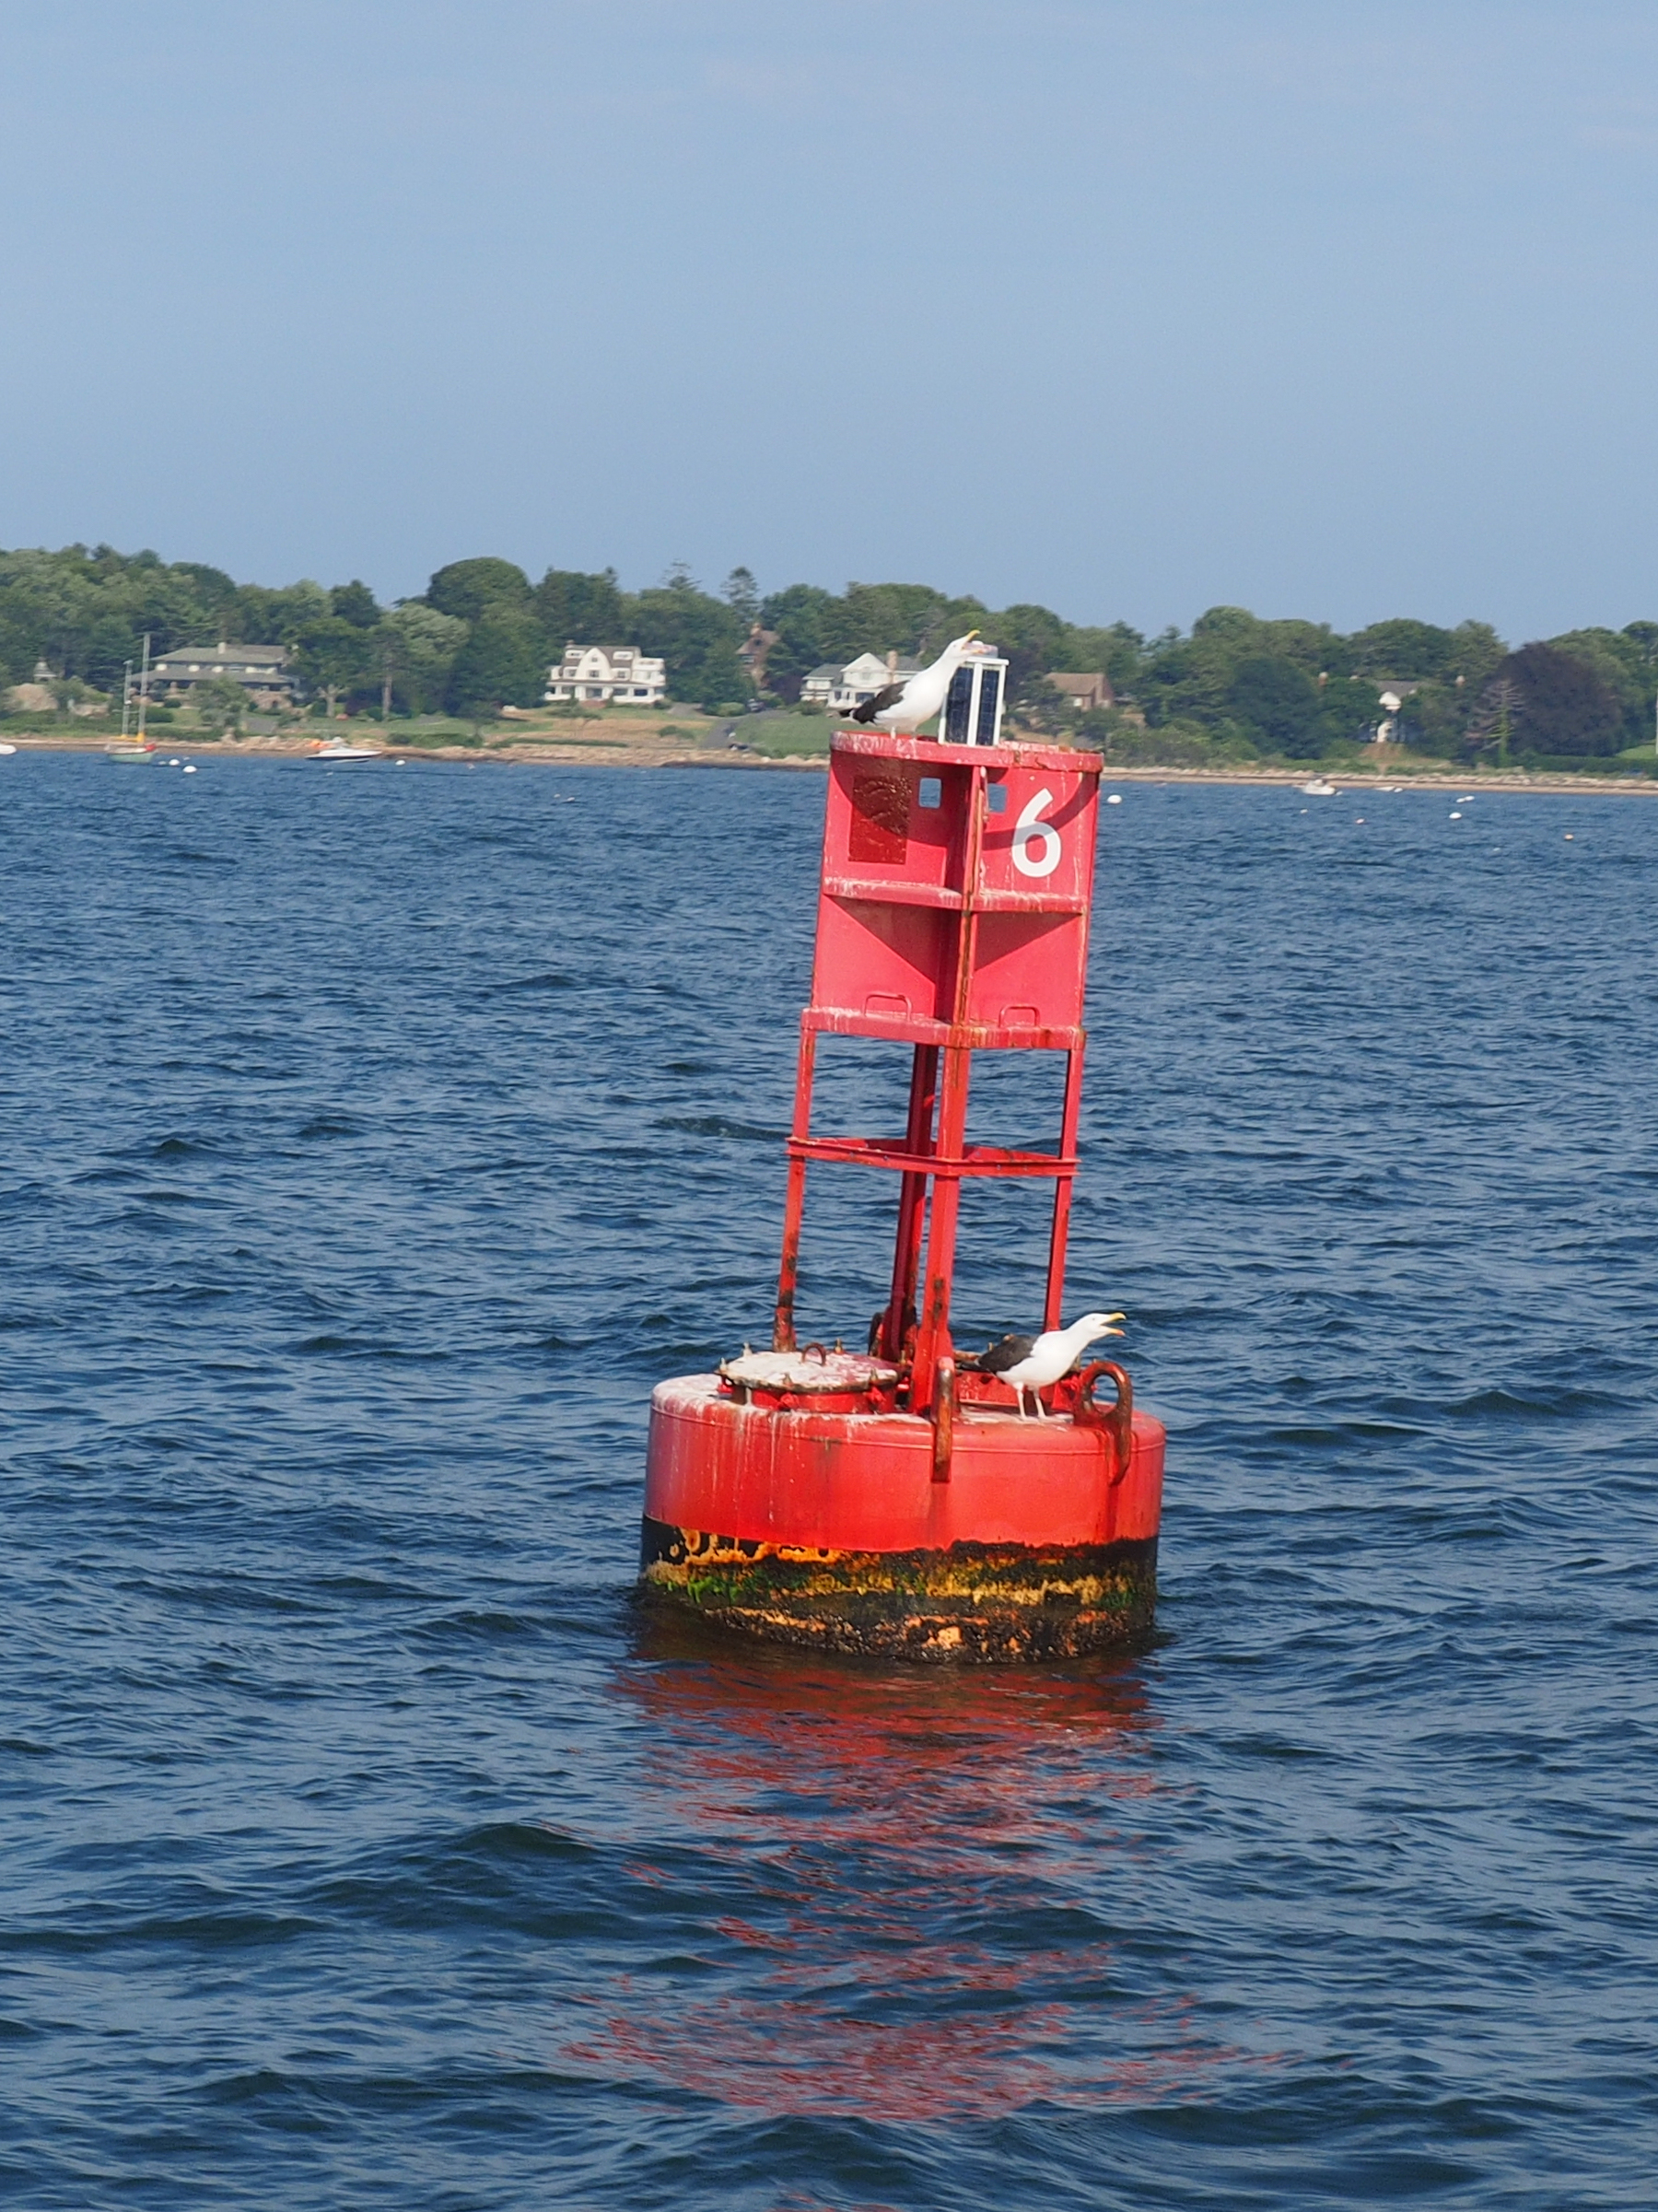 Seagulls on buoy #6